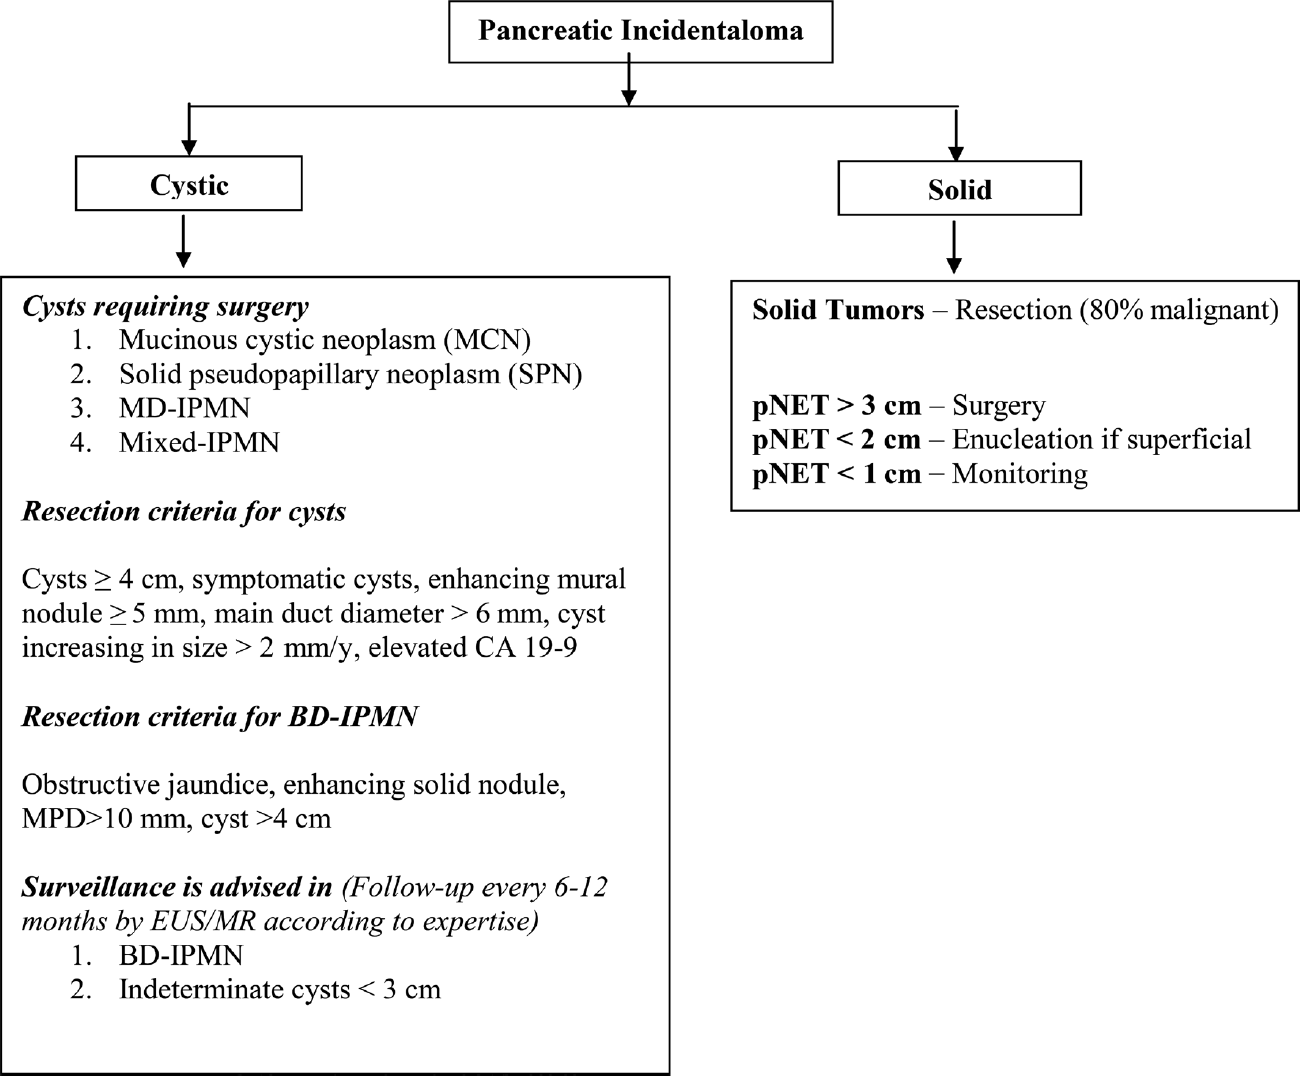 Algorithm for the management of pancreatic incidentalomas.61-64